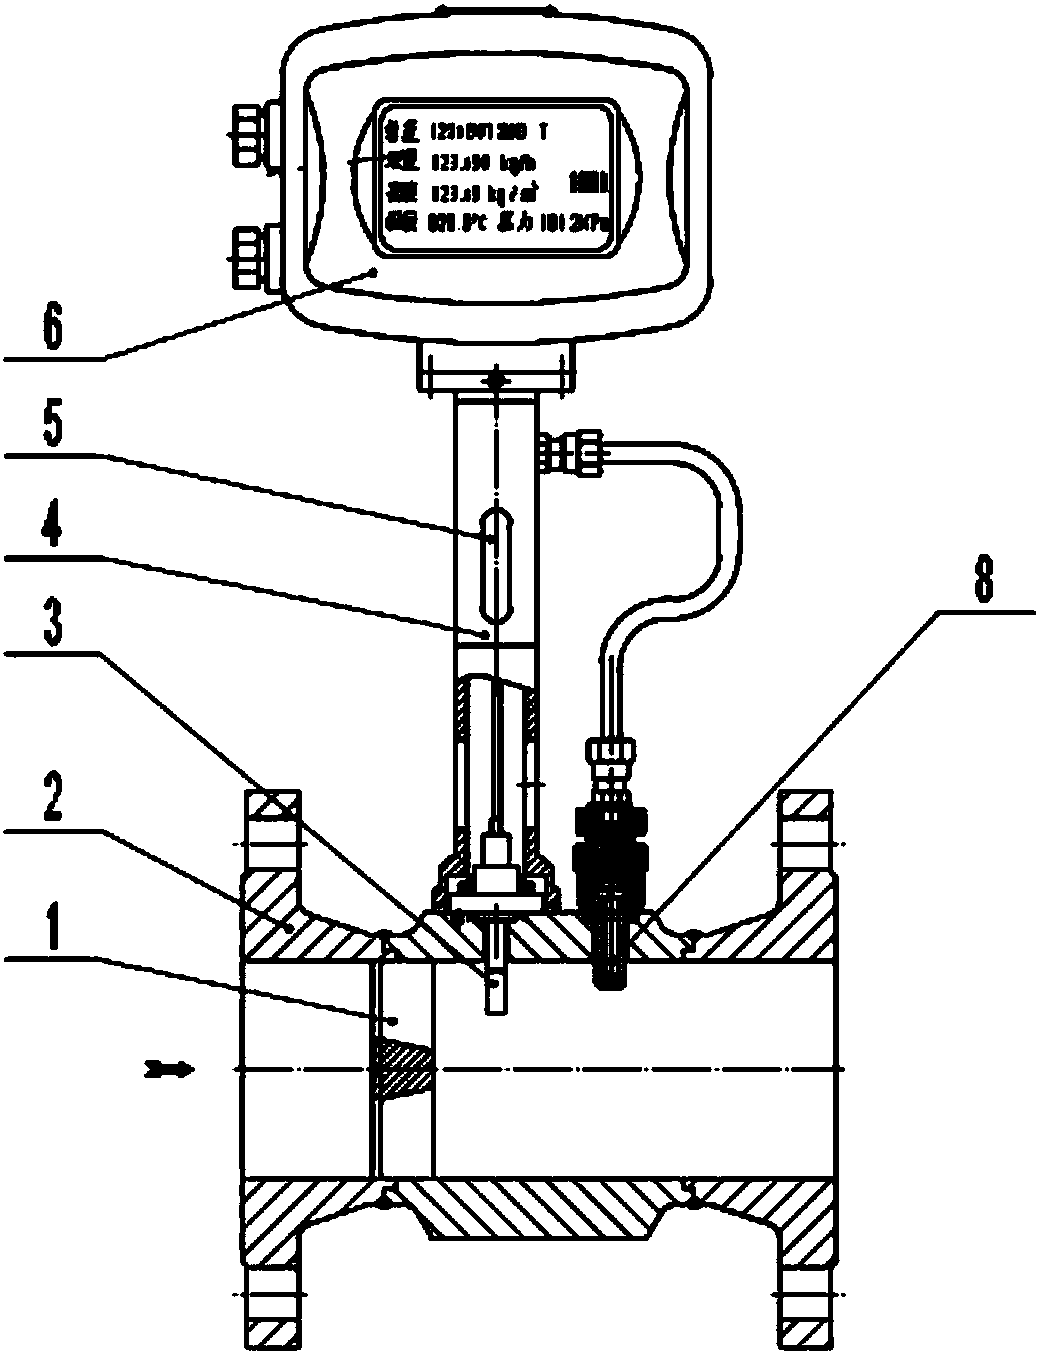 Steam vortex shedding flowmeter measuring multiple parameters